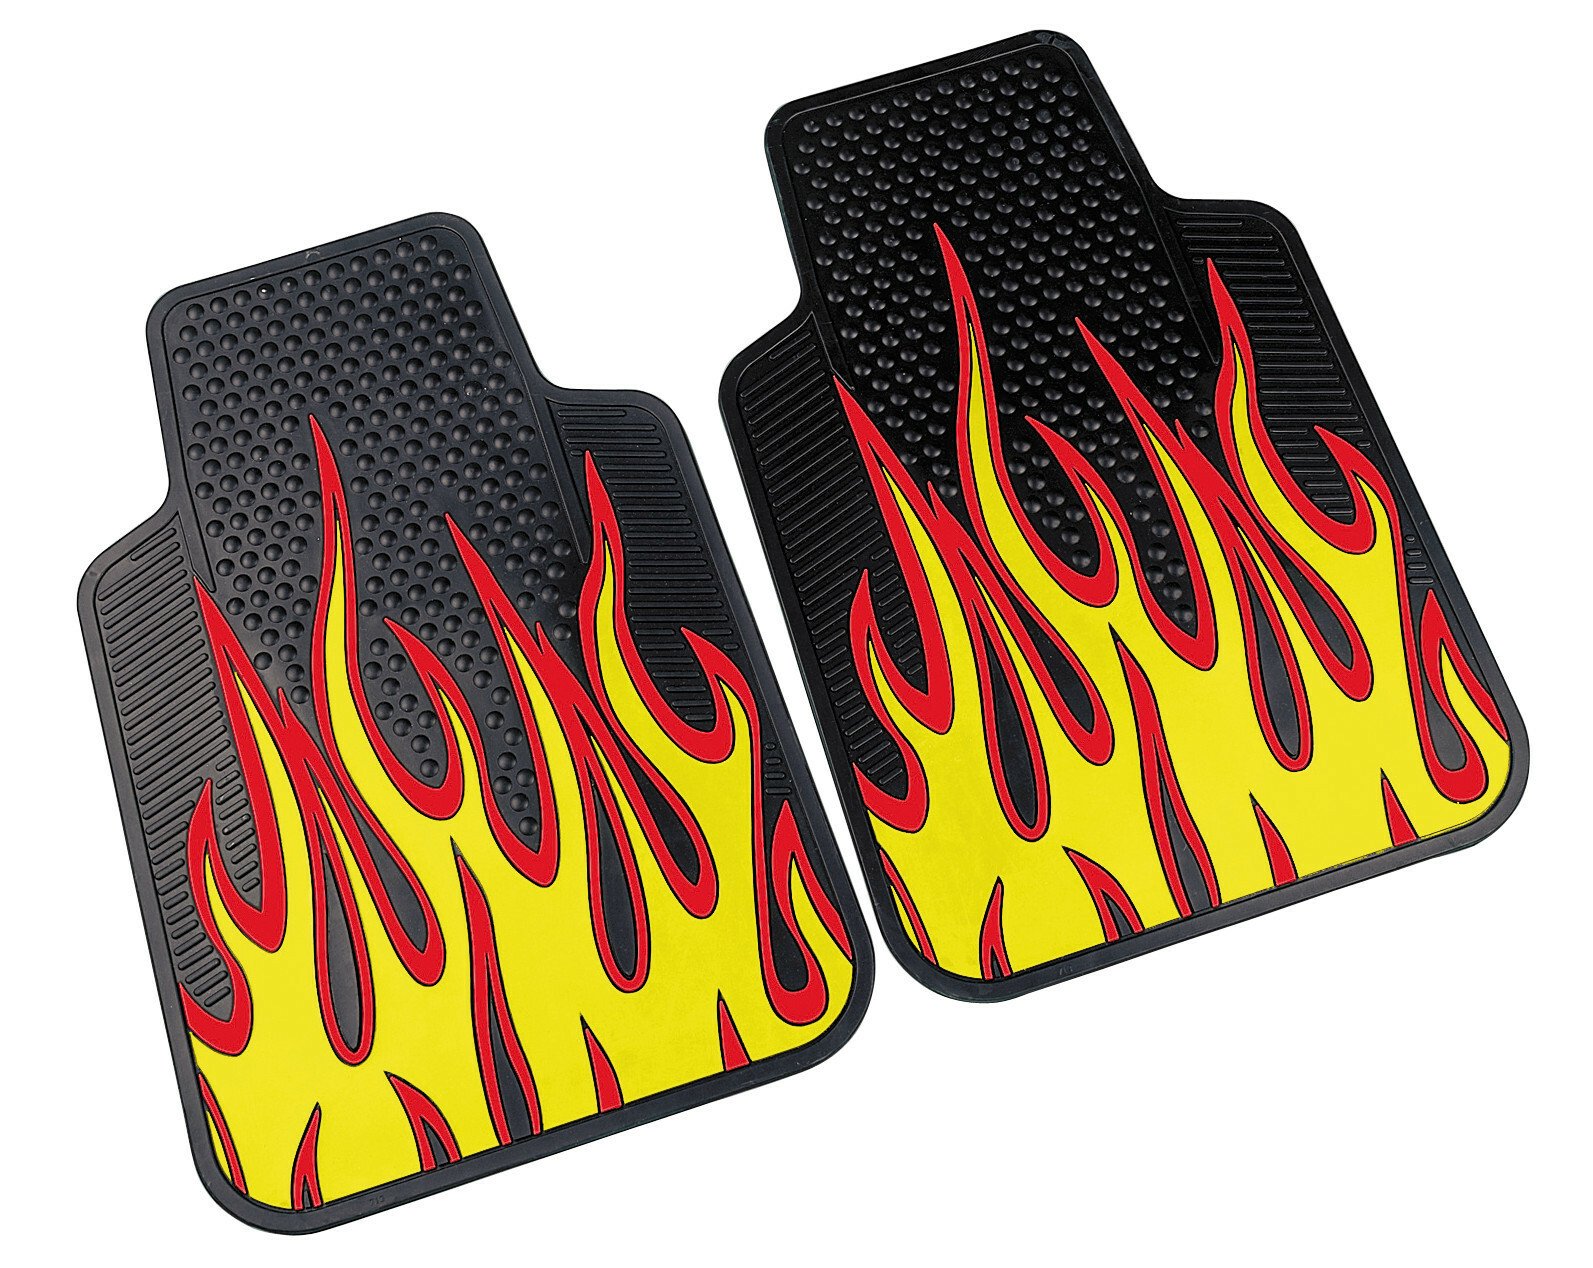 Fire & Furious set 2 universal rubber mats - Black/Yellow thumb